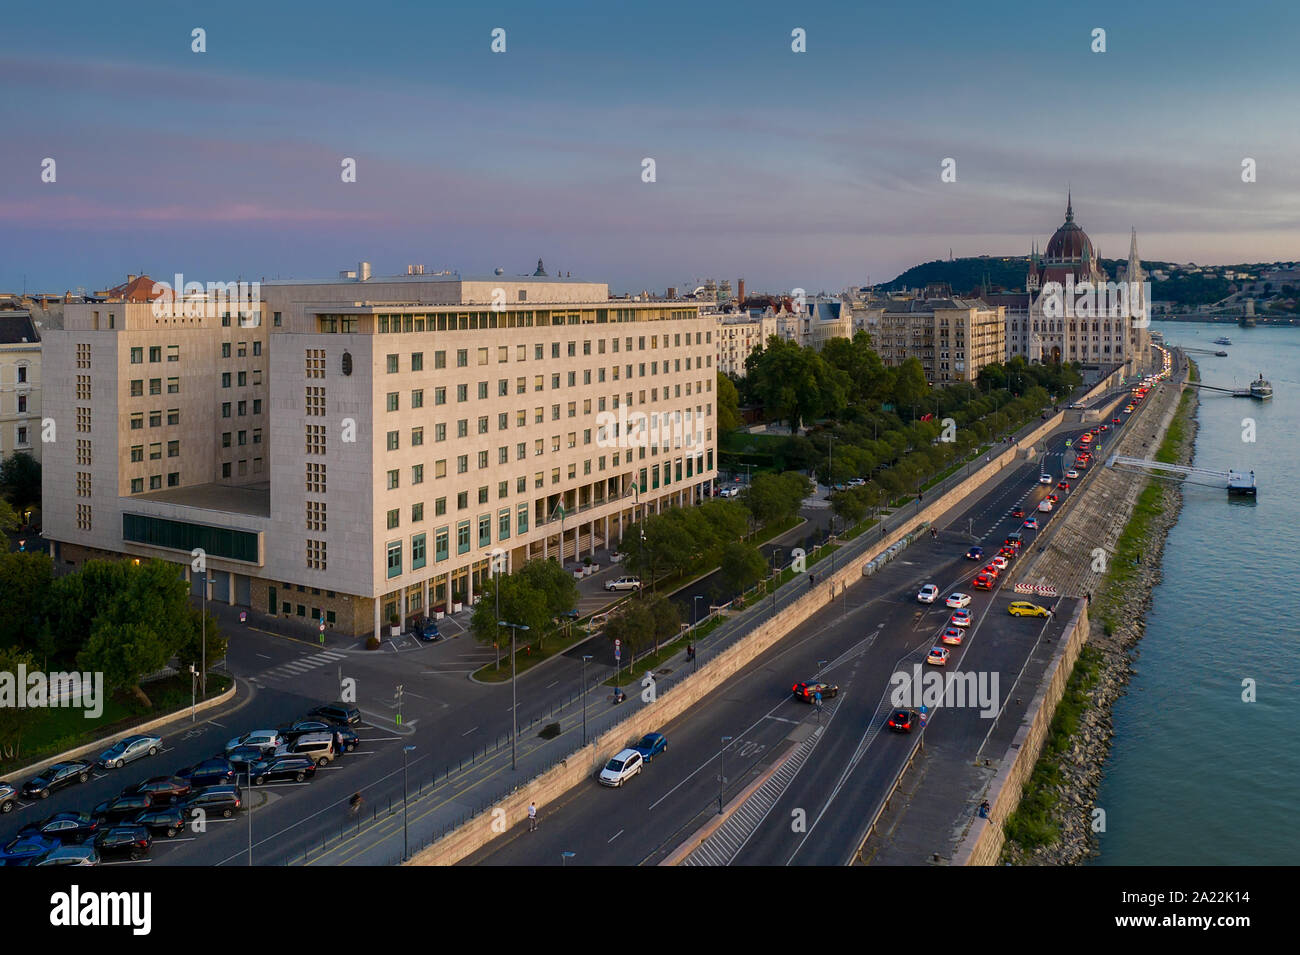 Hungarian parliamnet office building. Parliamentary offices. Europe, Hungary, Budapest, Mari Jaszai Square. Stock Photo